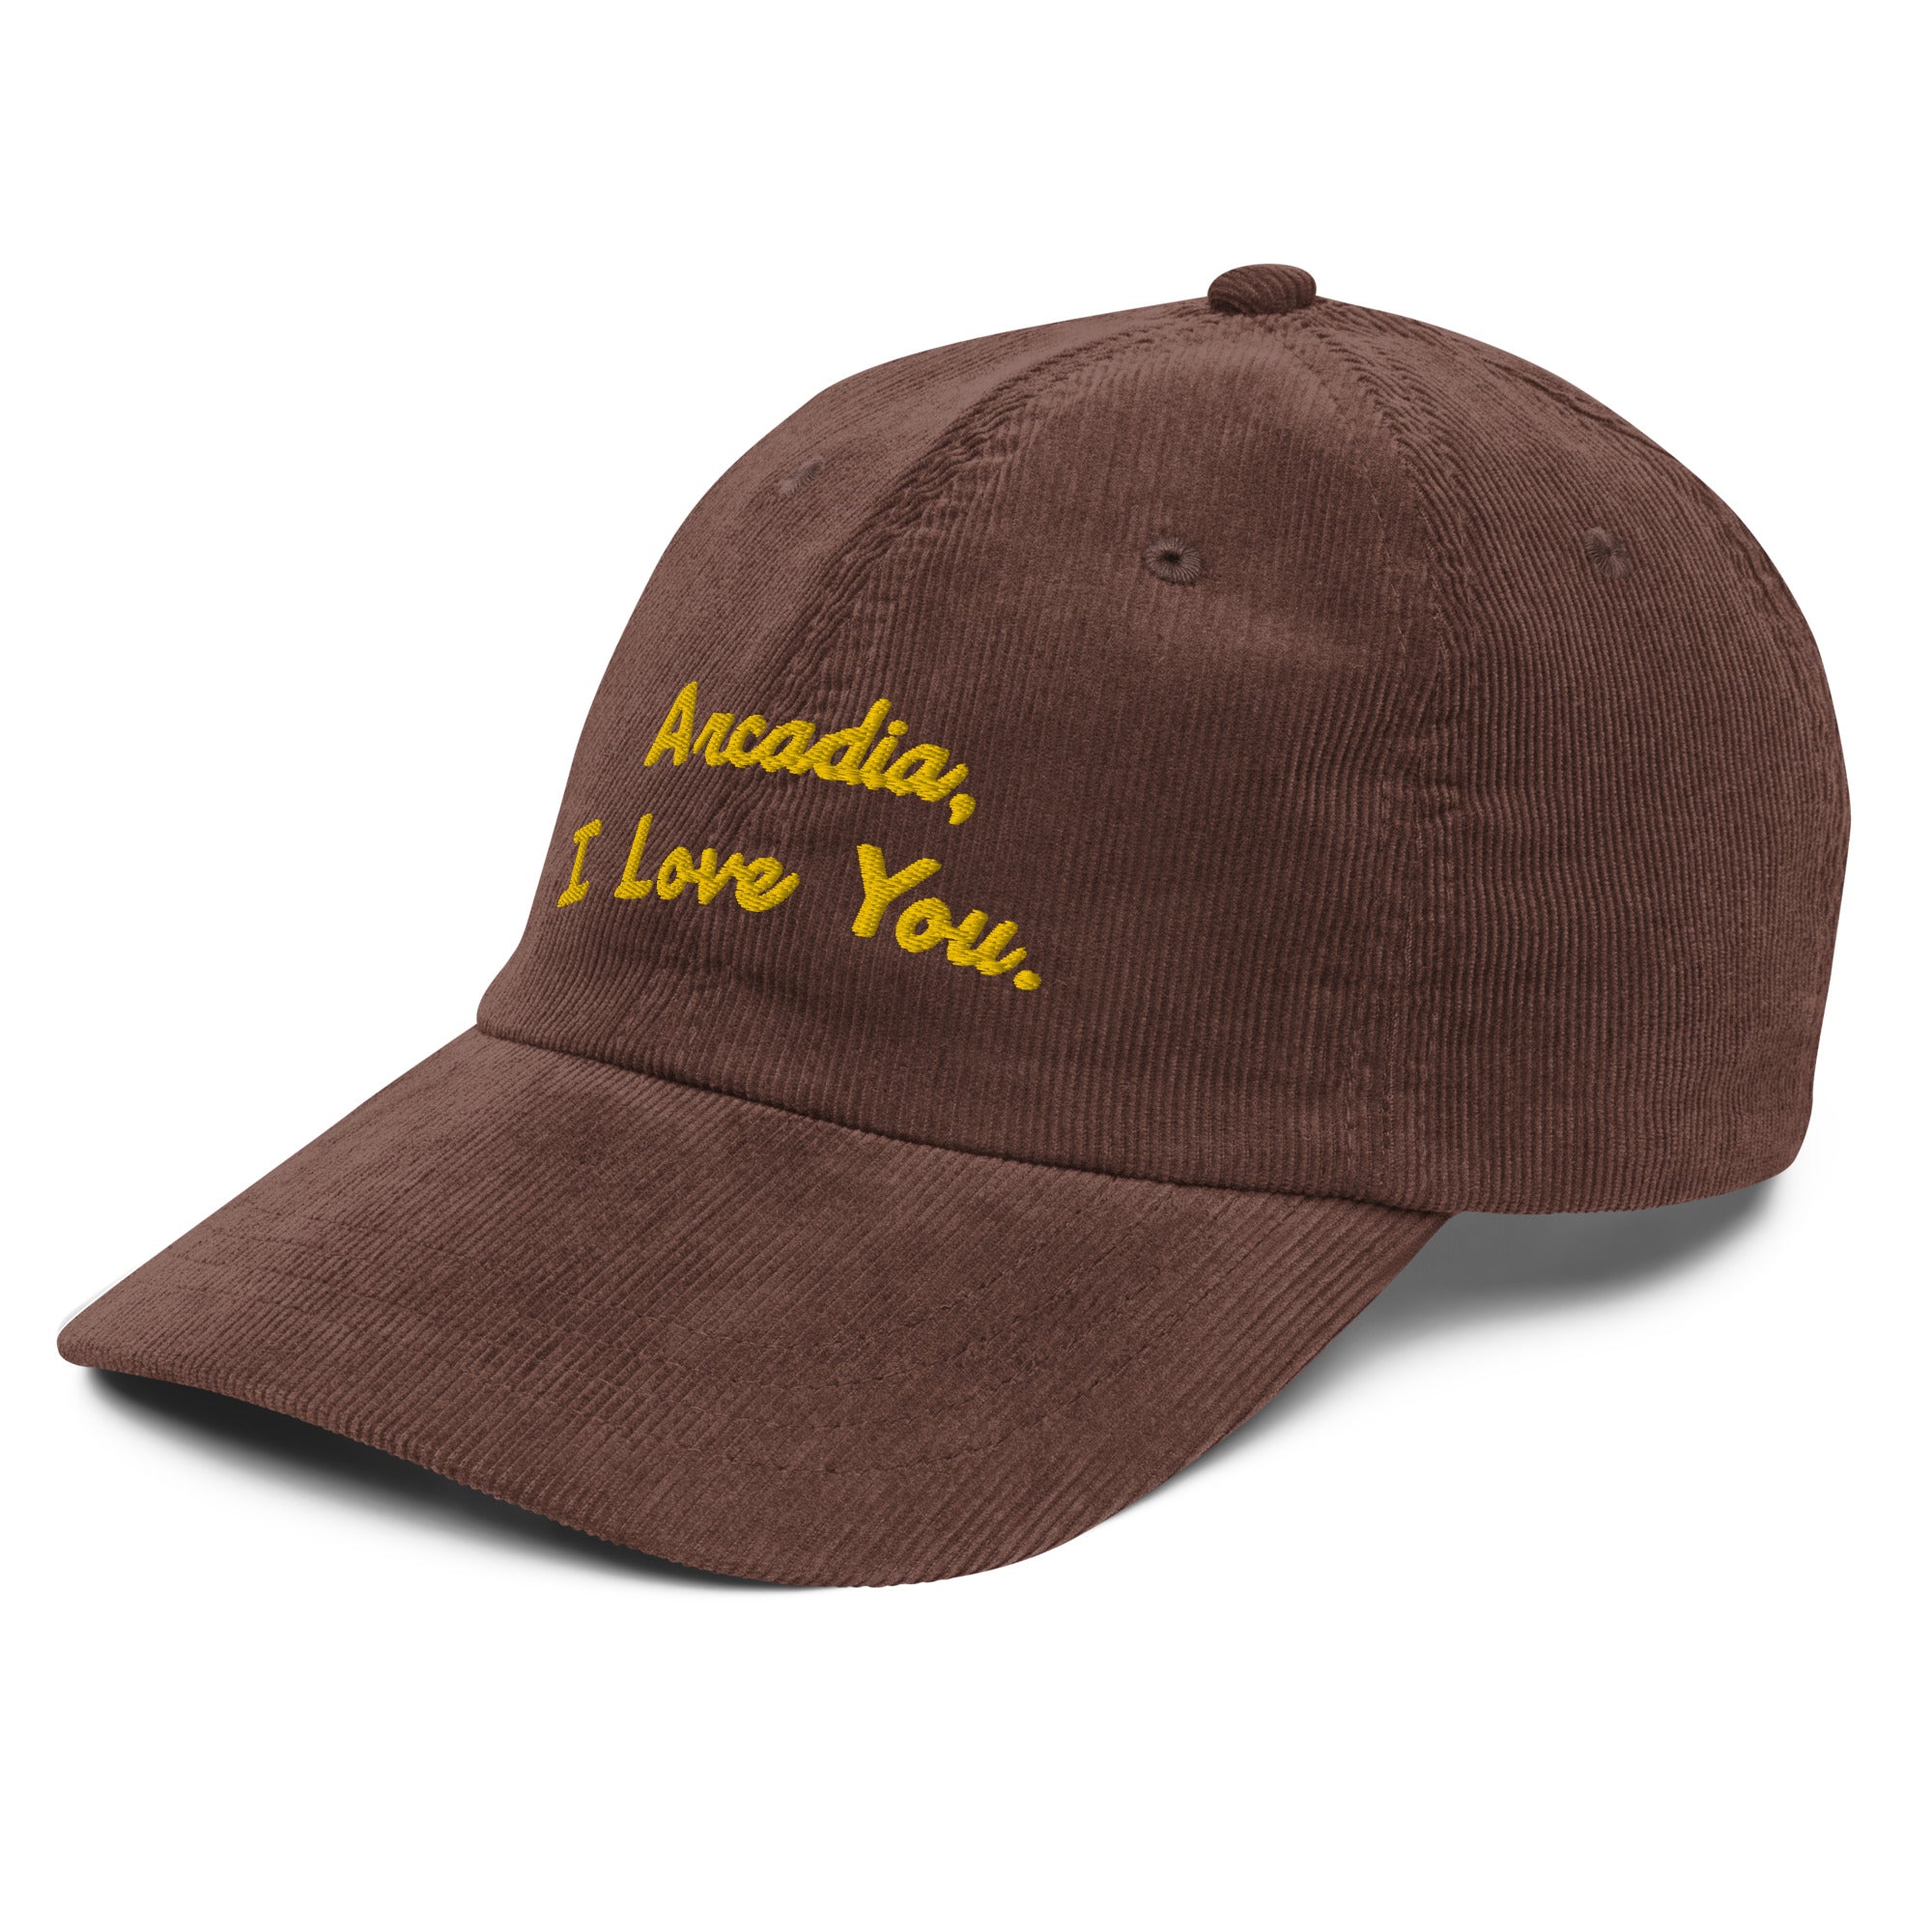 I Love You Corduroy Hat - Arcadia | Phoenix, AZ